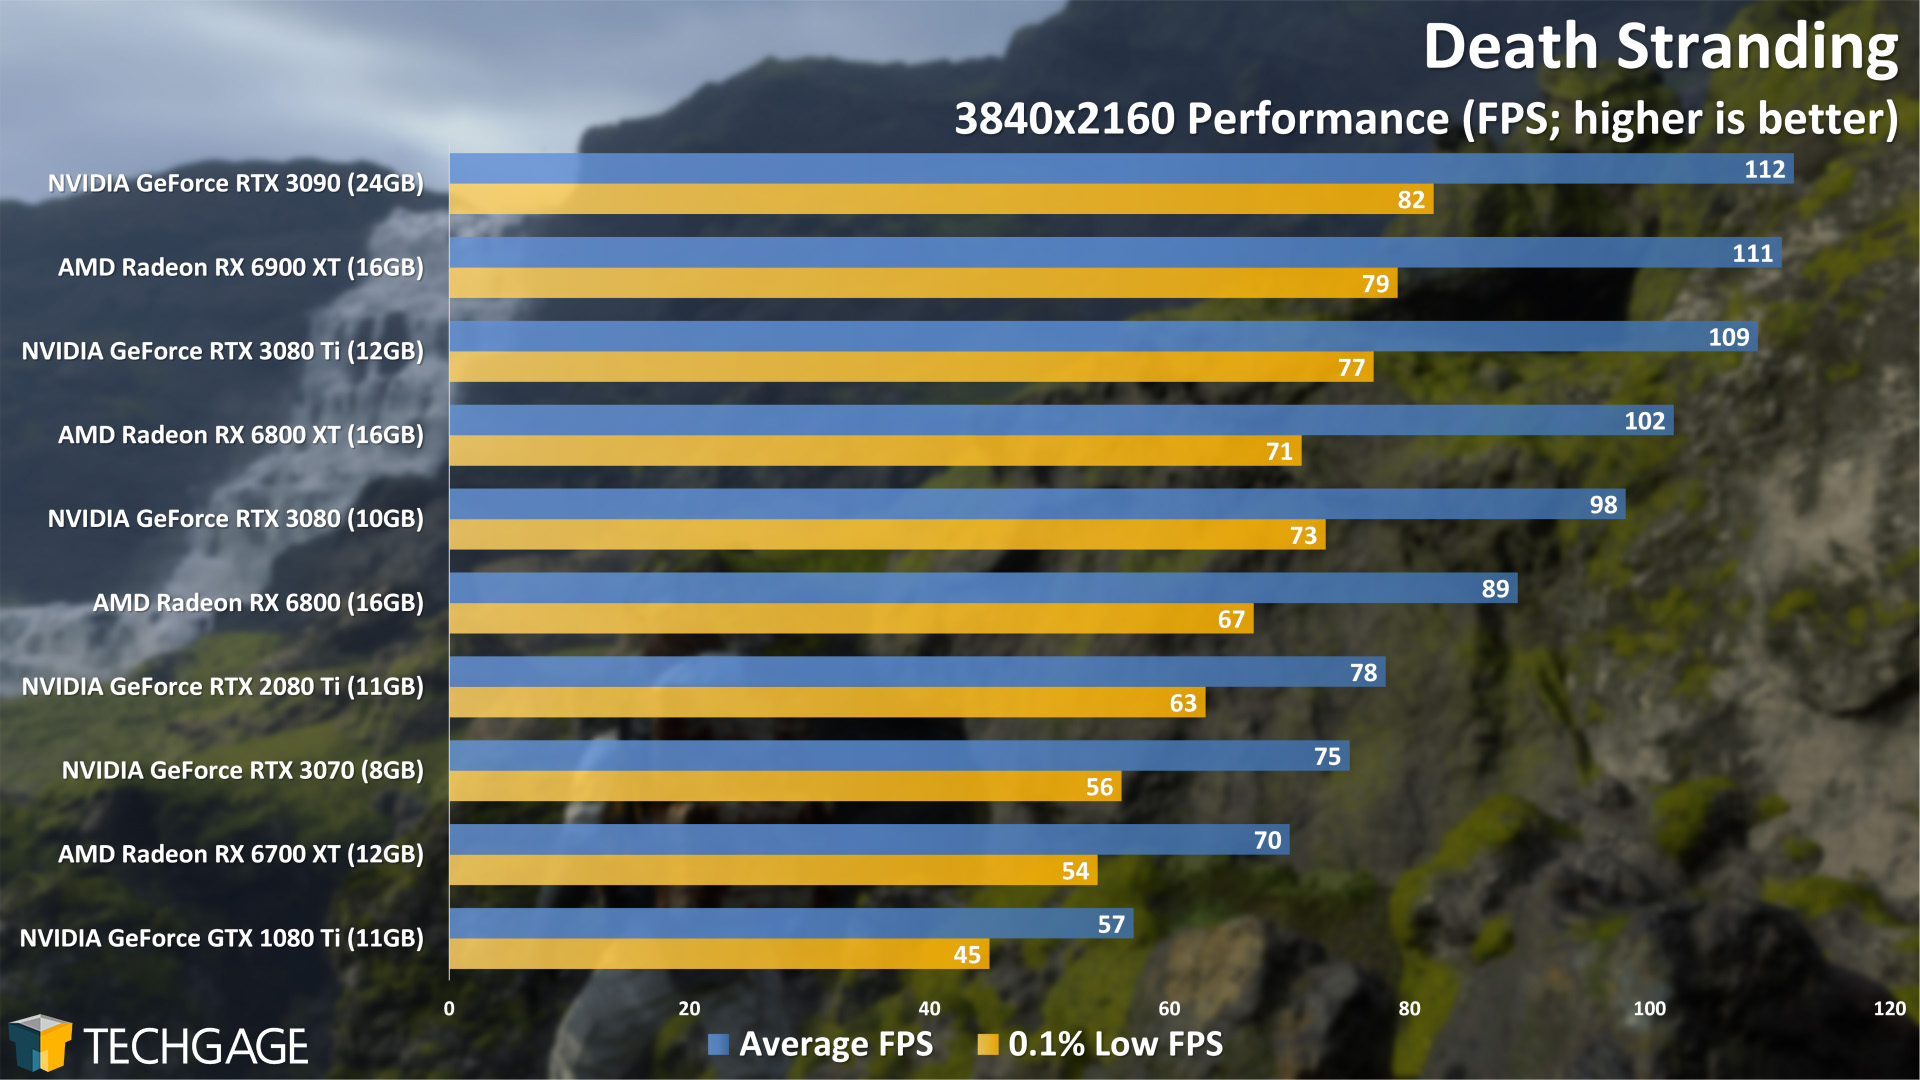 Death Stranding - 2160p Performance (NVIDIA GeForce RTX 3080 Ti)